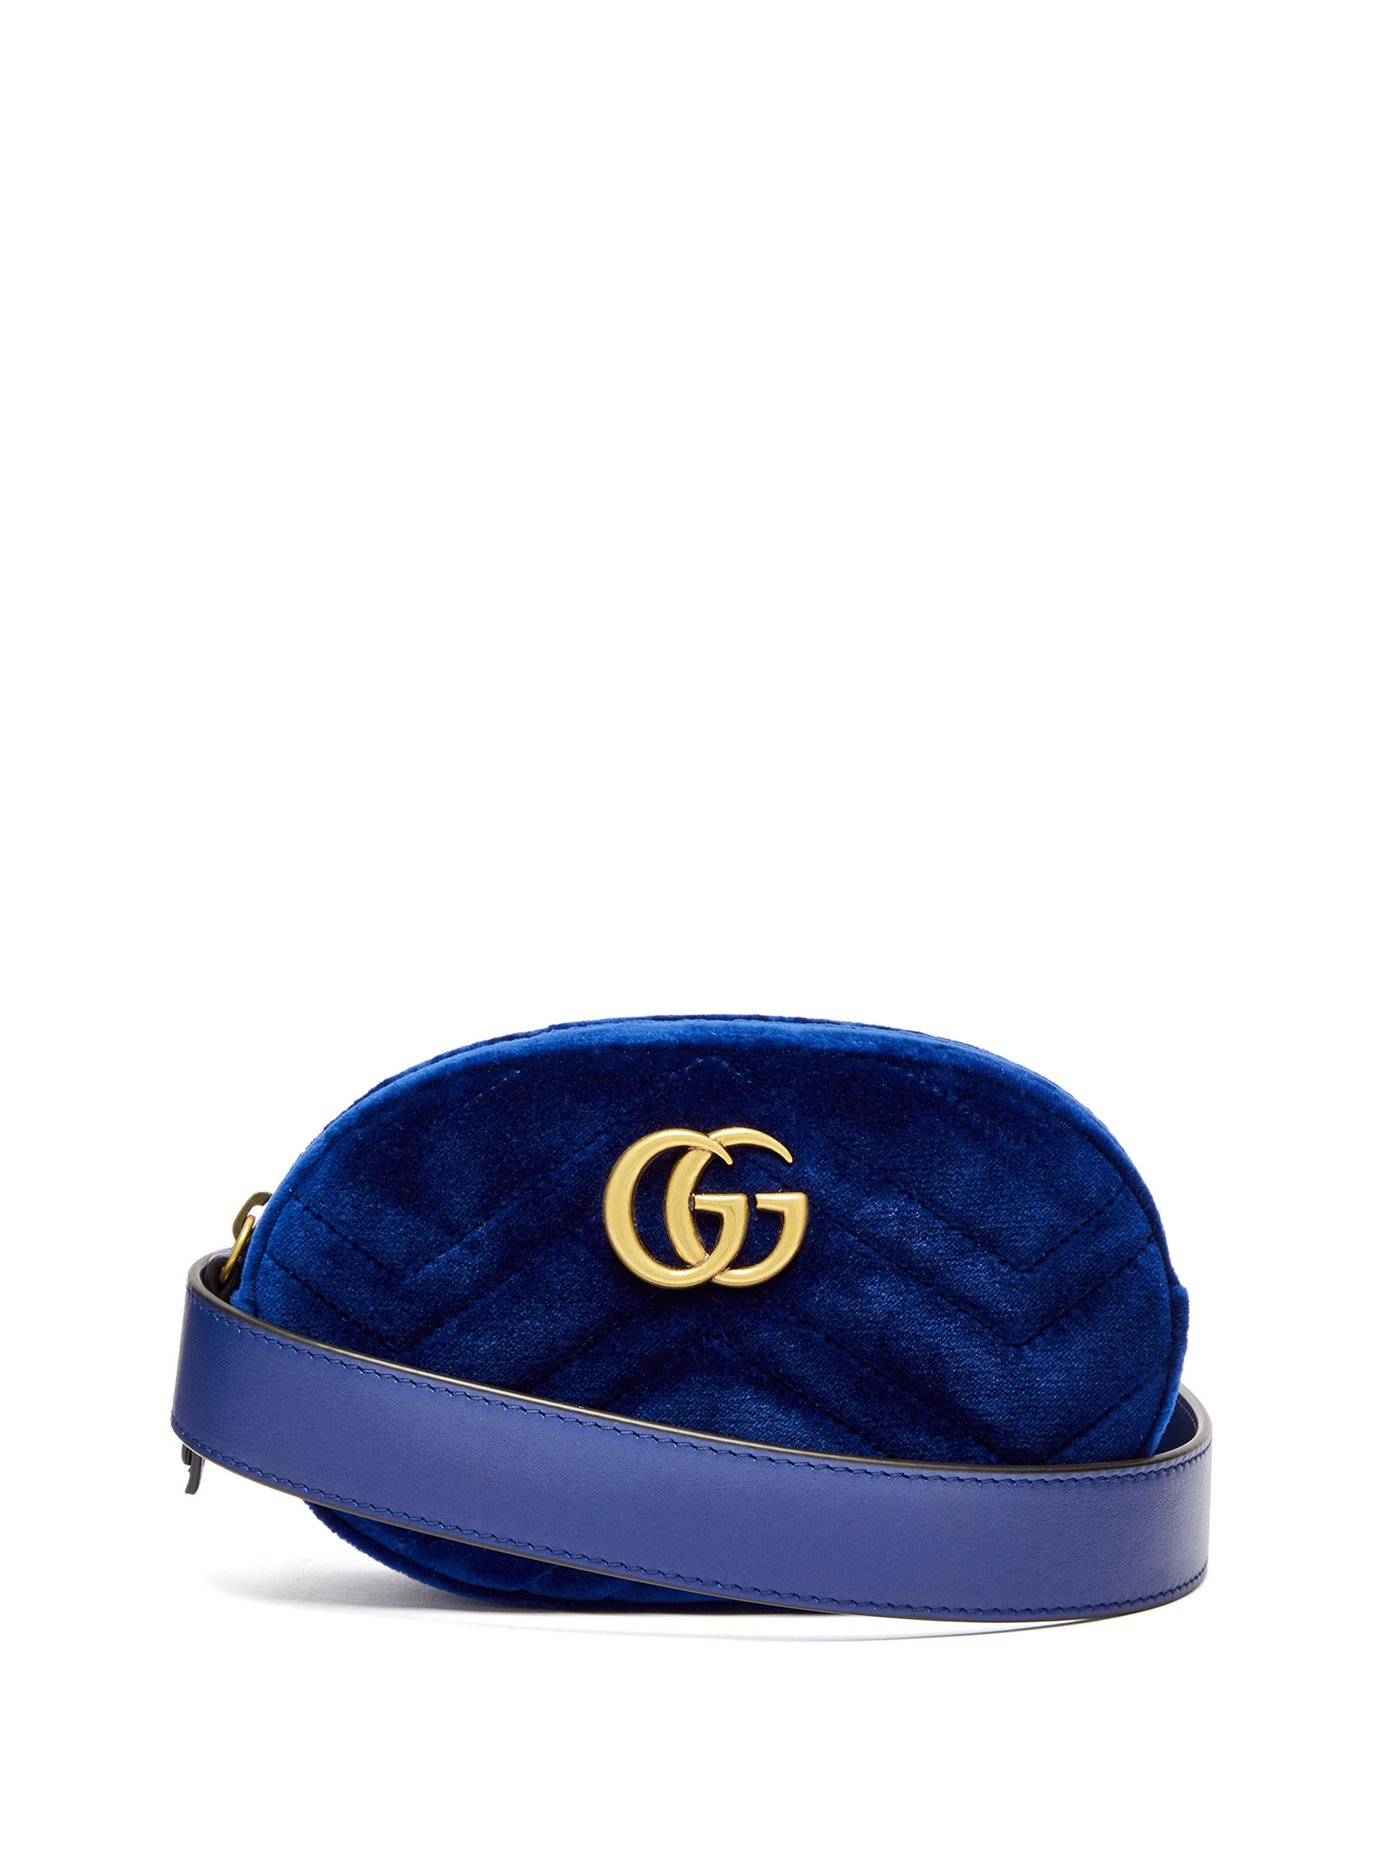 gucci belt bag blue